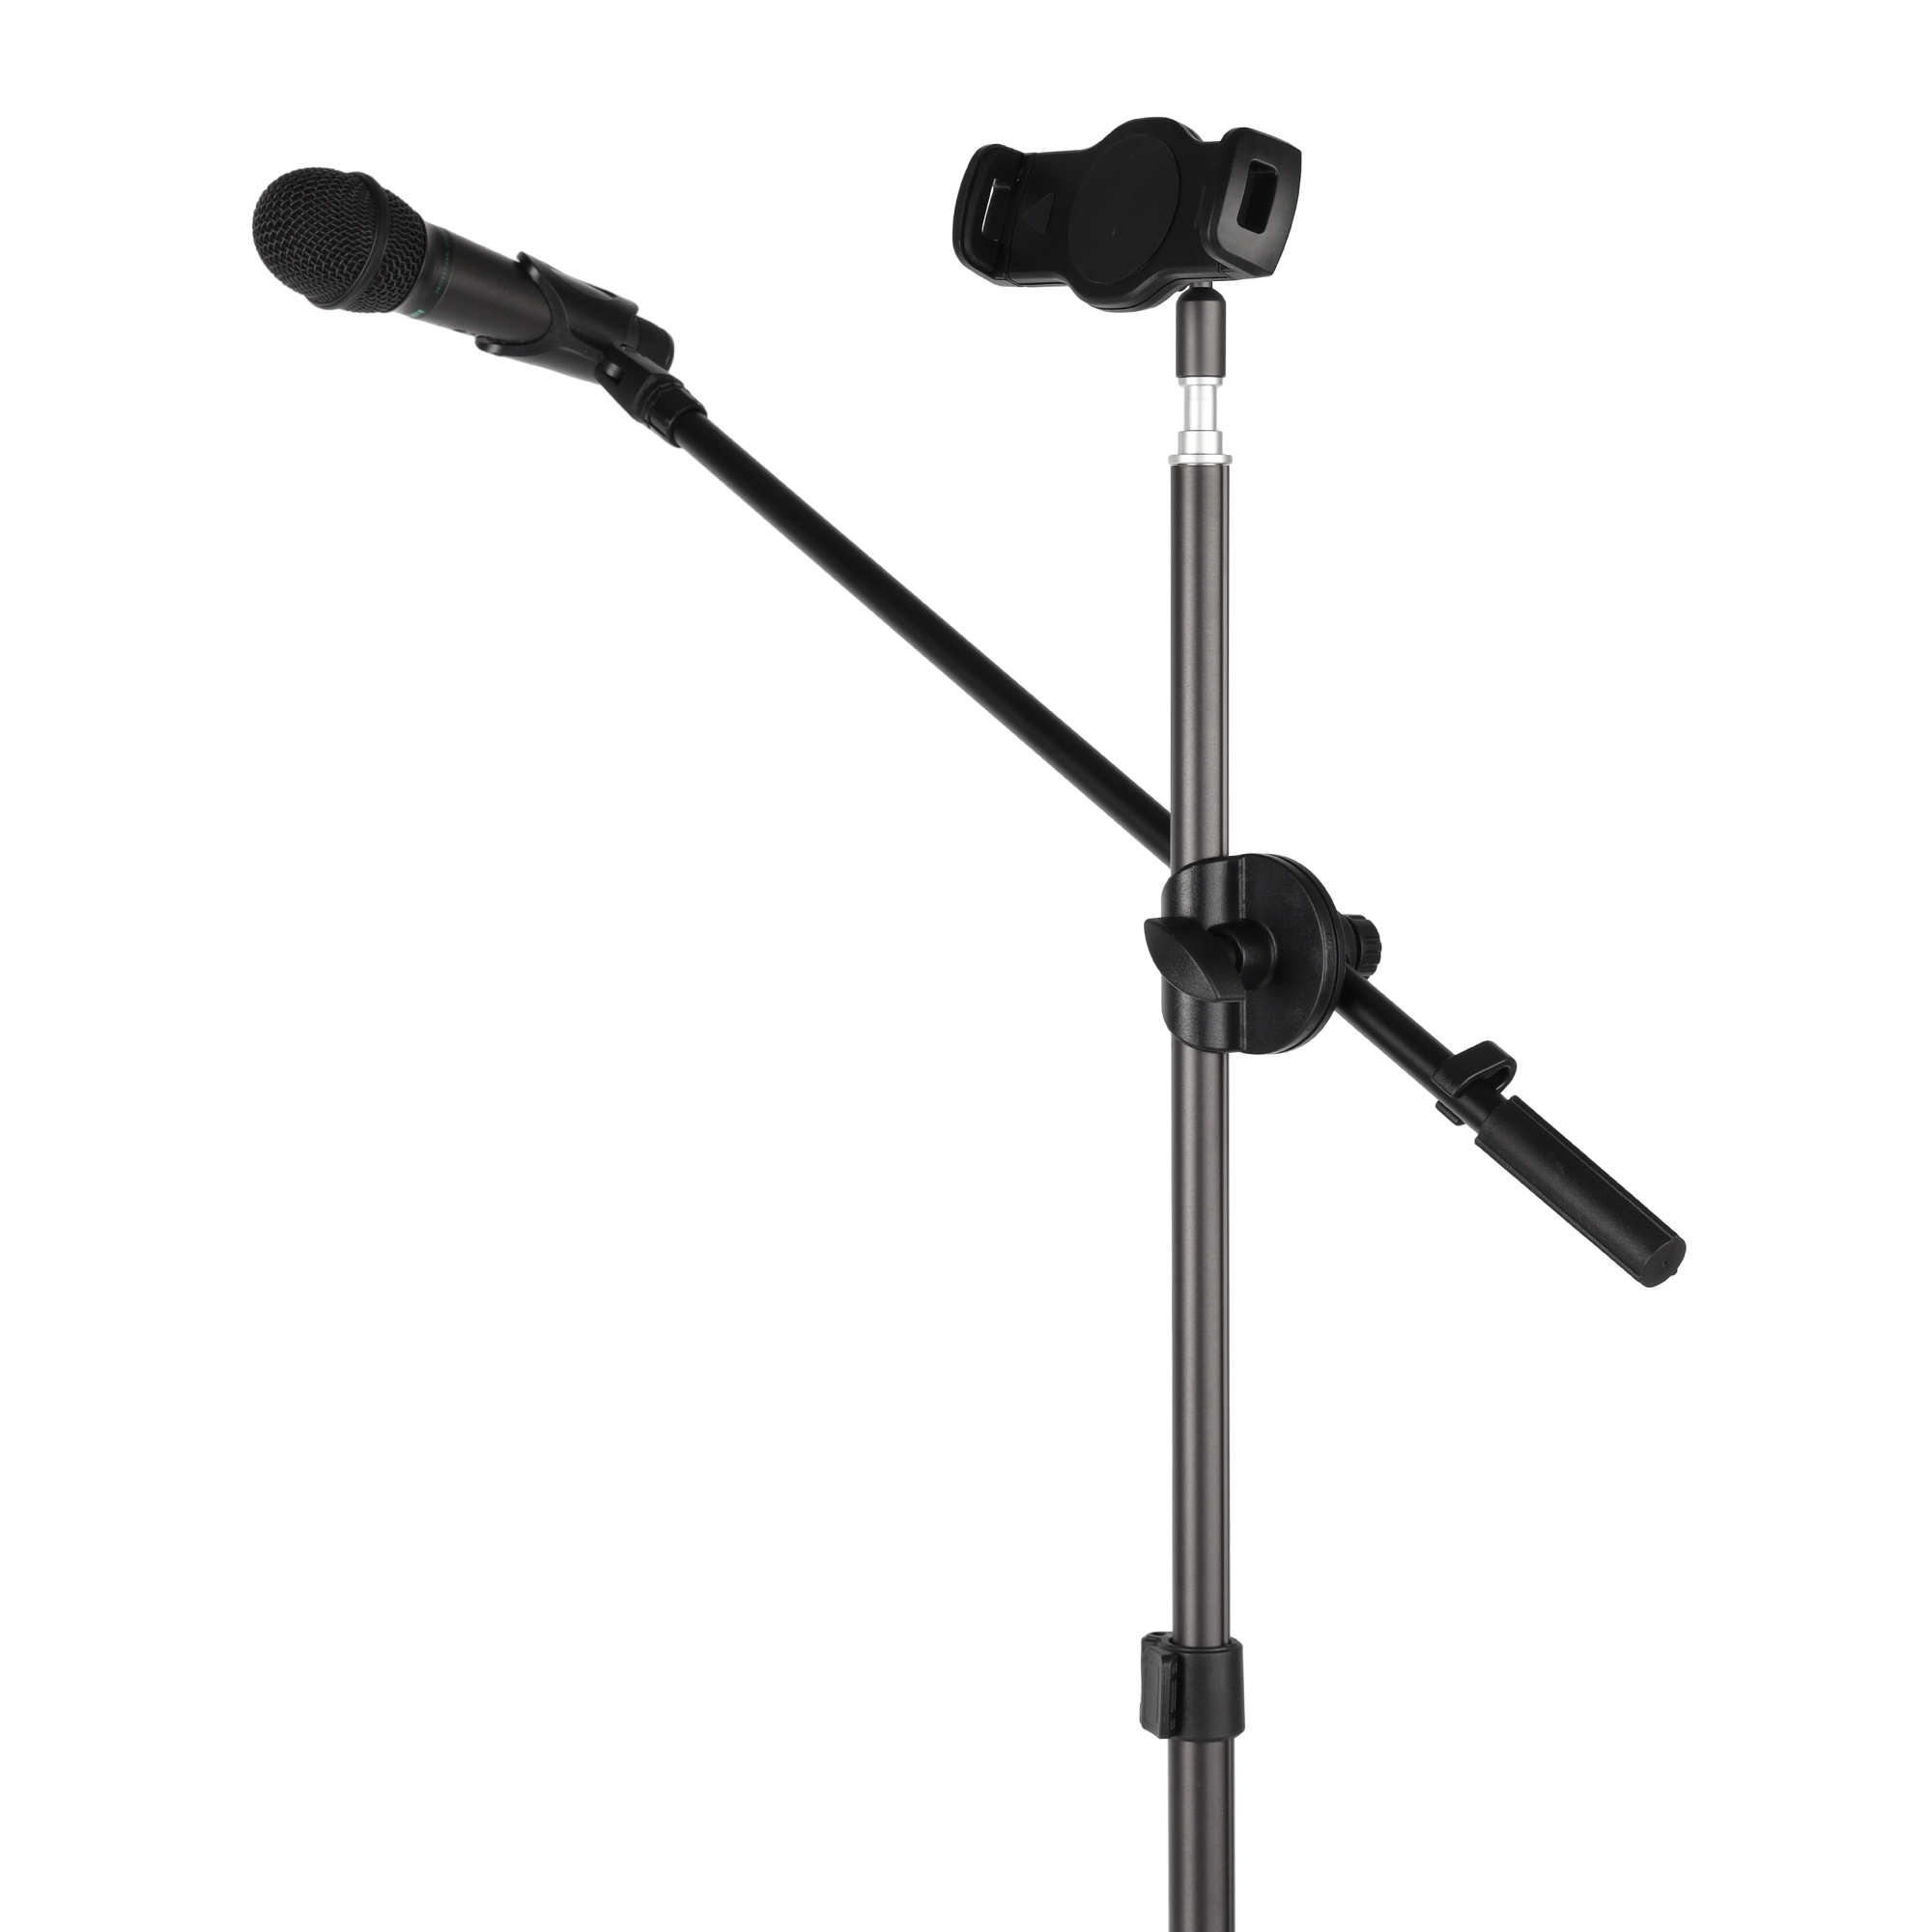 ayex flexibles Mikrofonstativ mit Mikrofonarm & Tablet bzw. Smartphonehalterung, Mikrofon Stativ Mikrofonständer Musikstand 1/4 Zoll Spigot Adapter